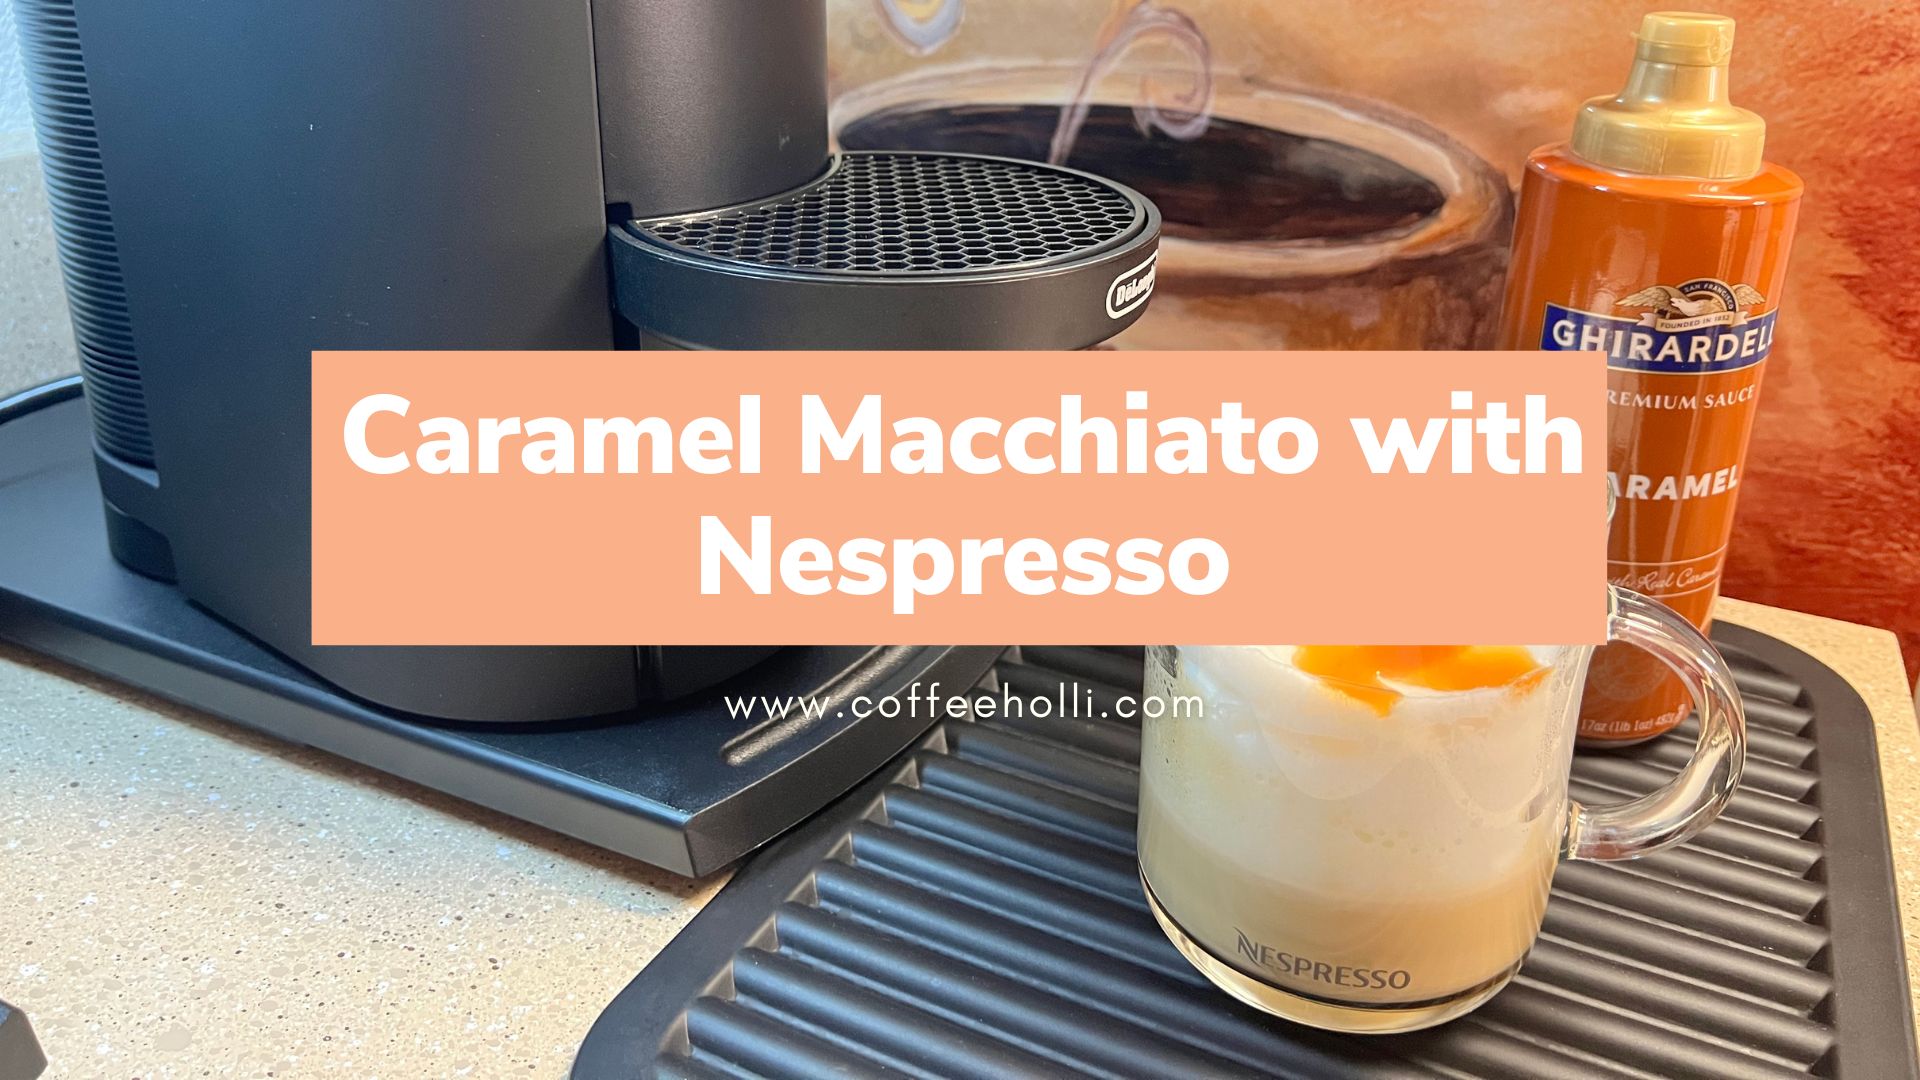 Caramel Macchiato with Nespresso